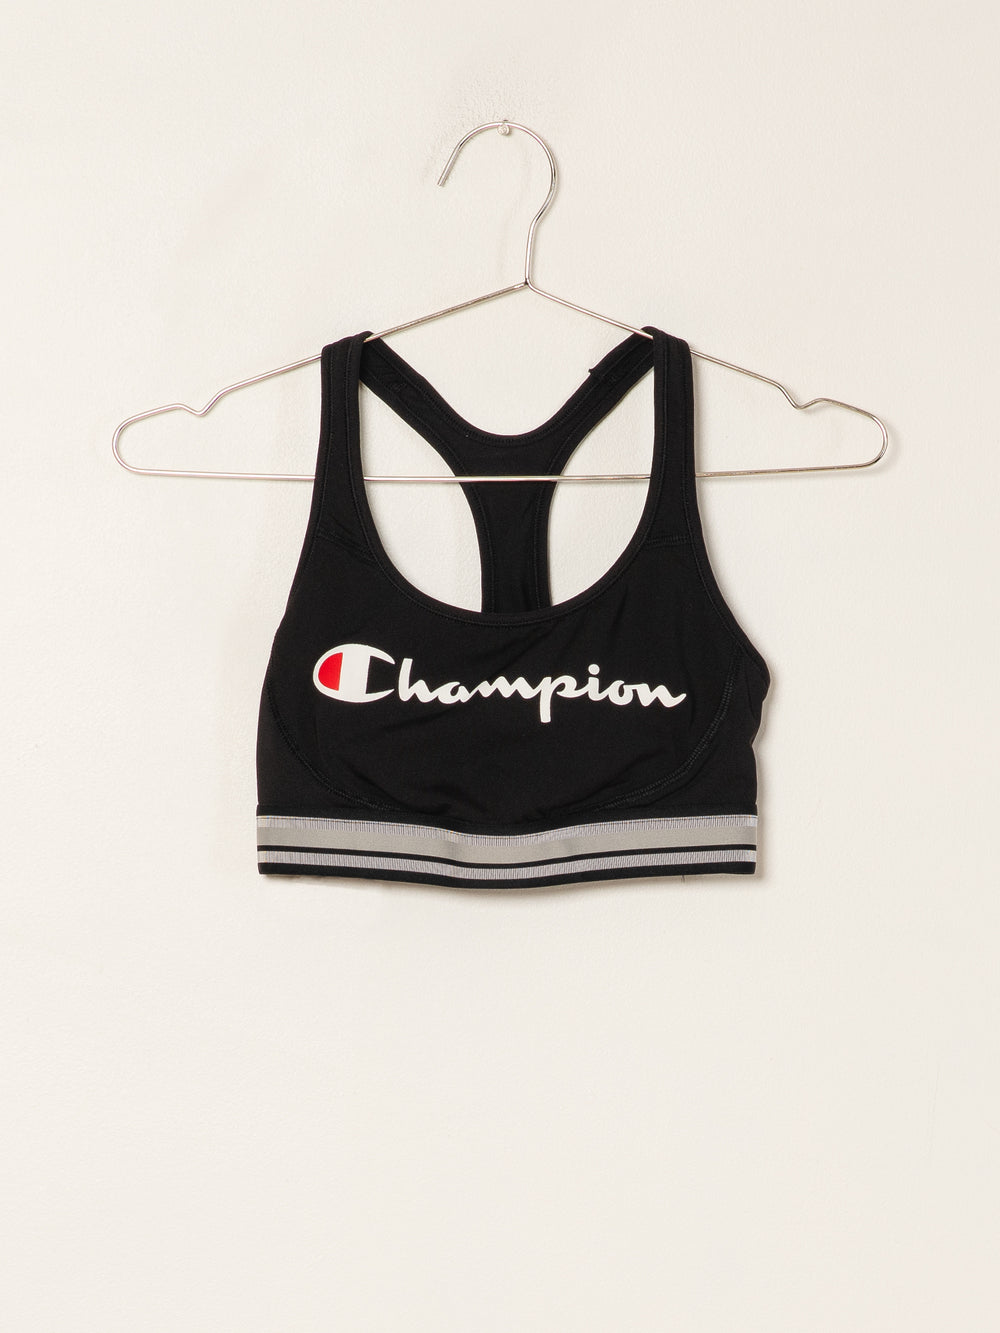 Champion Women's Absolute Sports Bra Bra, -black/white c logo, X